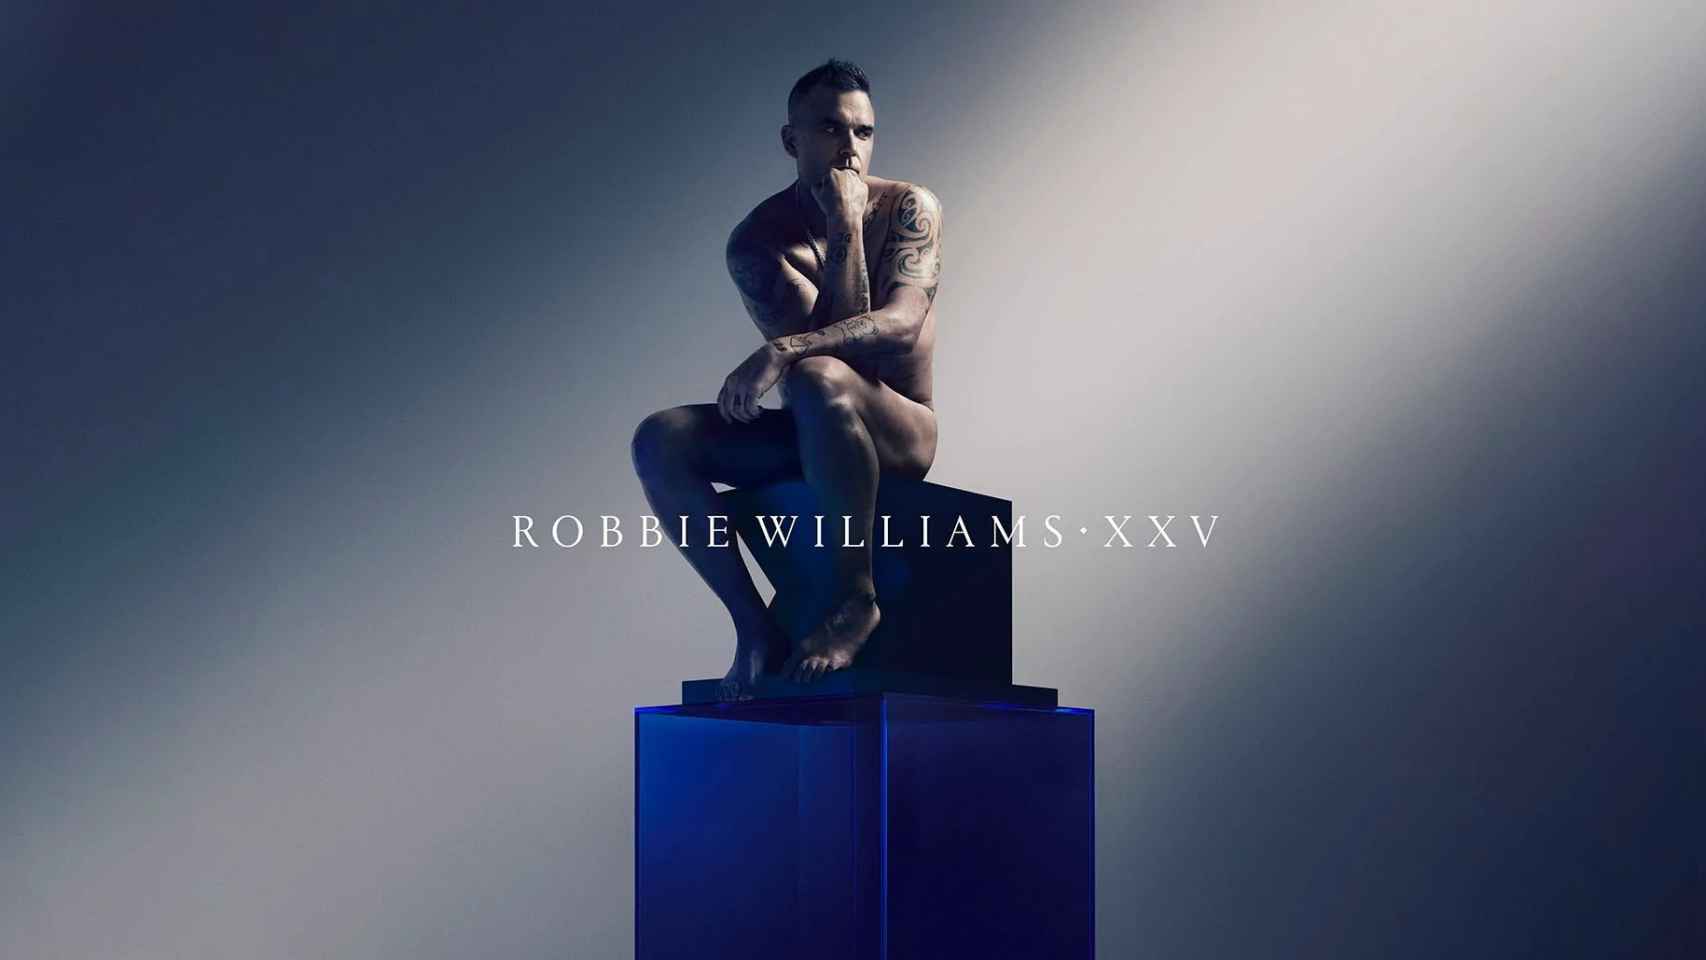 Imagen promocional de la gira de Robbie Williams / ROBBIEWILLIAMS.COM